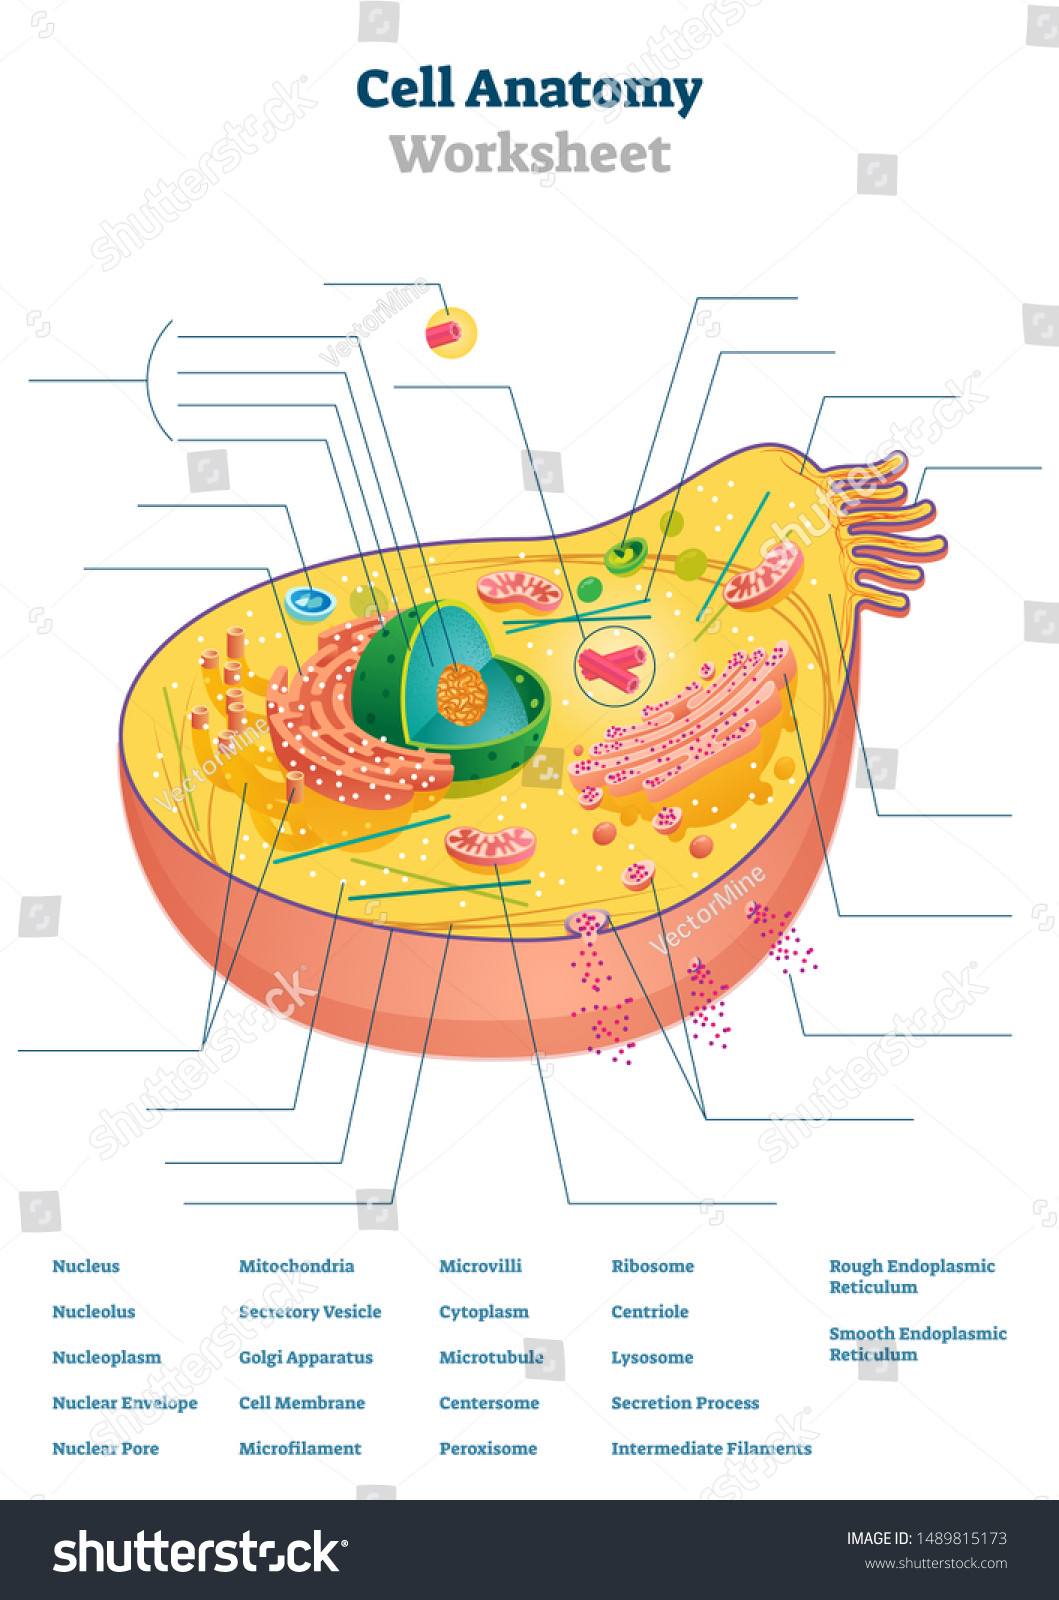 Free Printable Anatomy Worksheets Cell Anatomy Worksheet Vector Illustration Educational à¹à¸§à¸